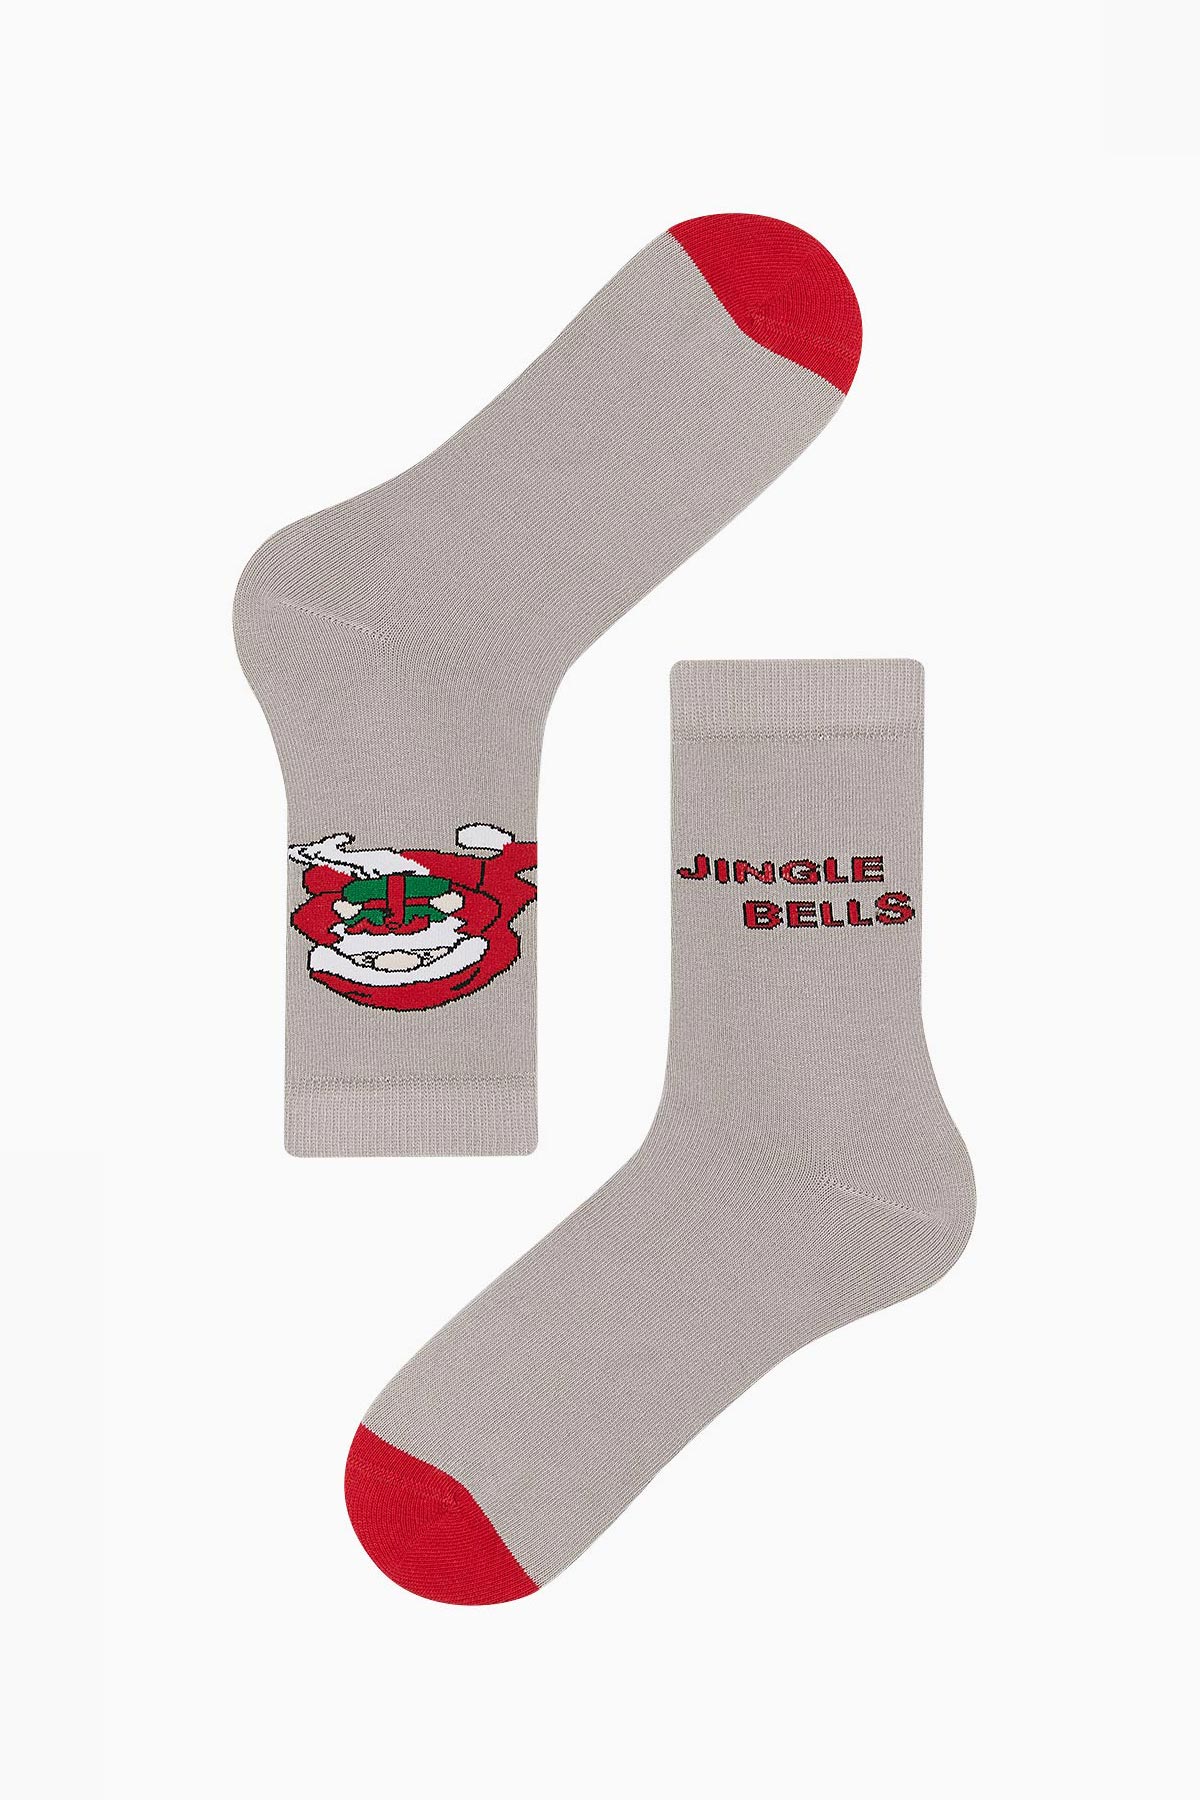 Bross - Bross Jingle Bells Printed Christmas Socks